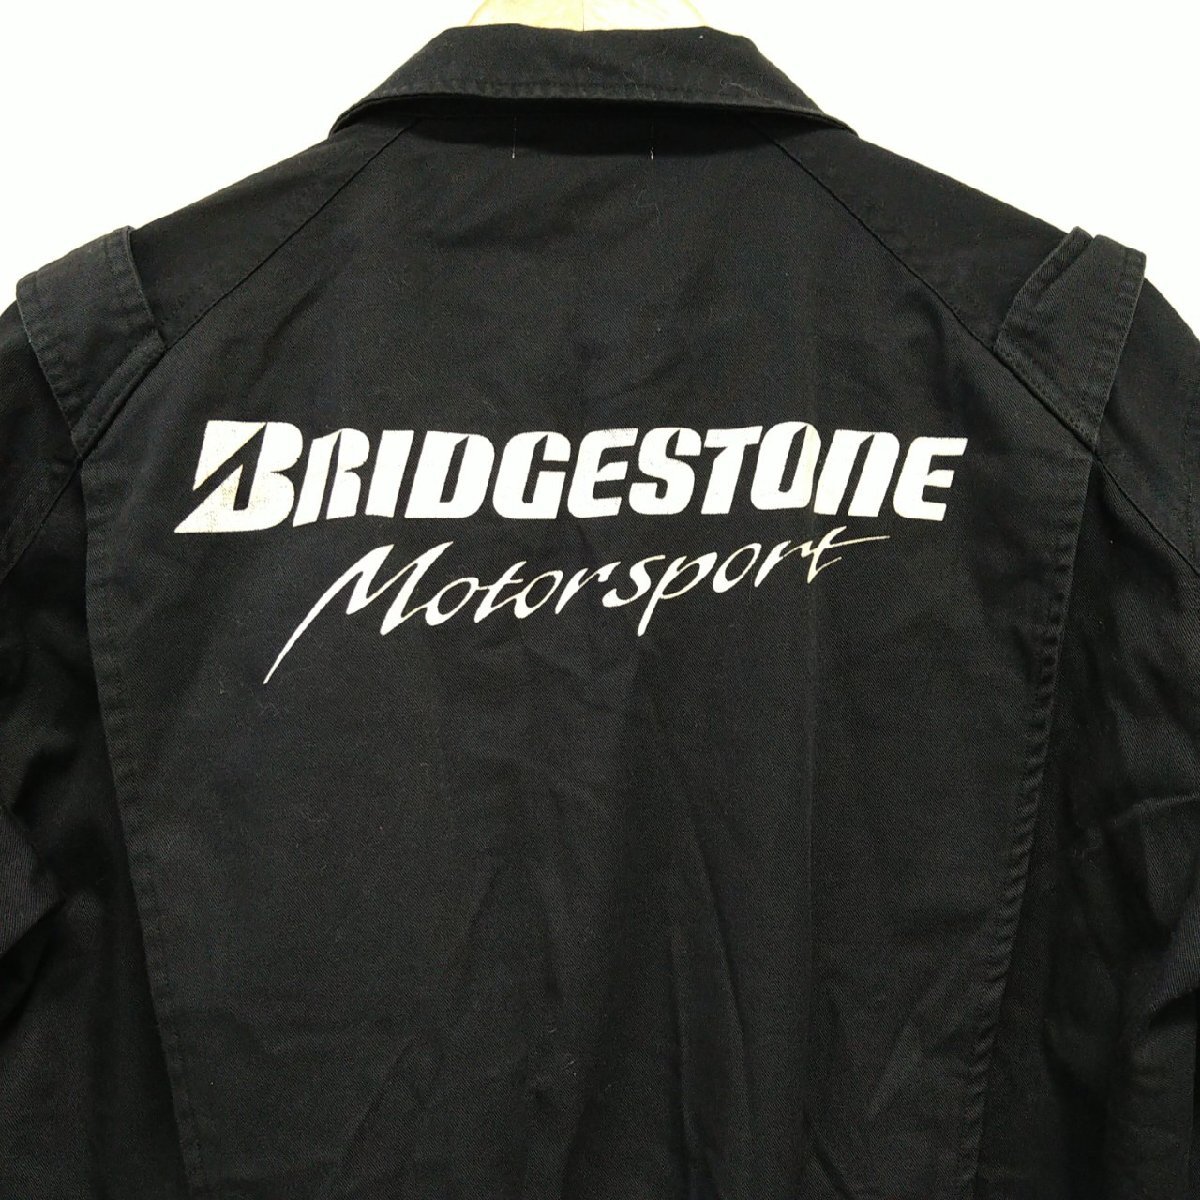 (^w^)b BRIDGESTONE MOTORSPORT 80s 90s Vintage Bridgestone Motor Sport pito Crew костюм комбинезон рабочая одежда чёрный 8470wE